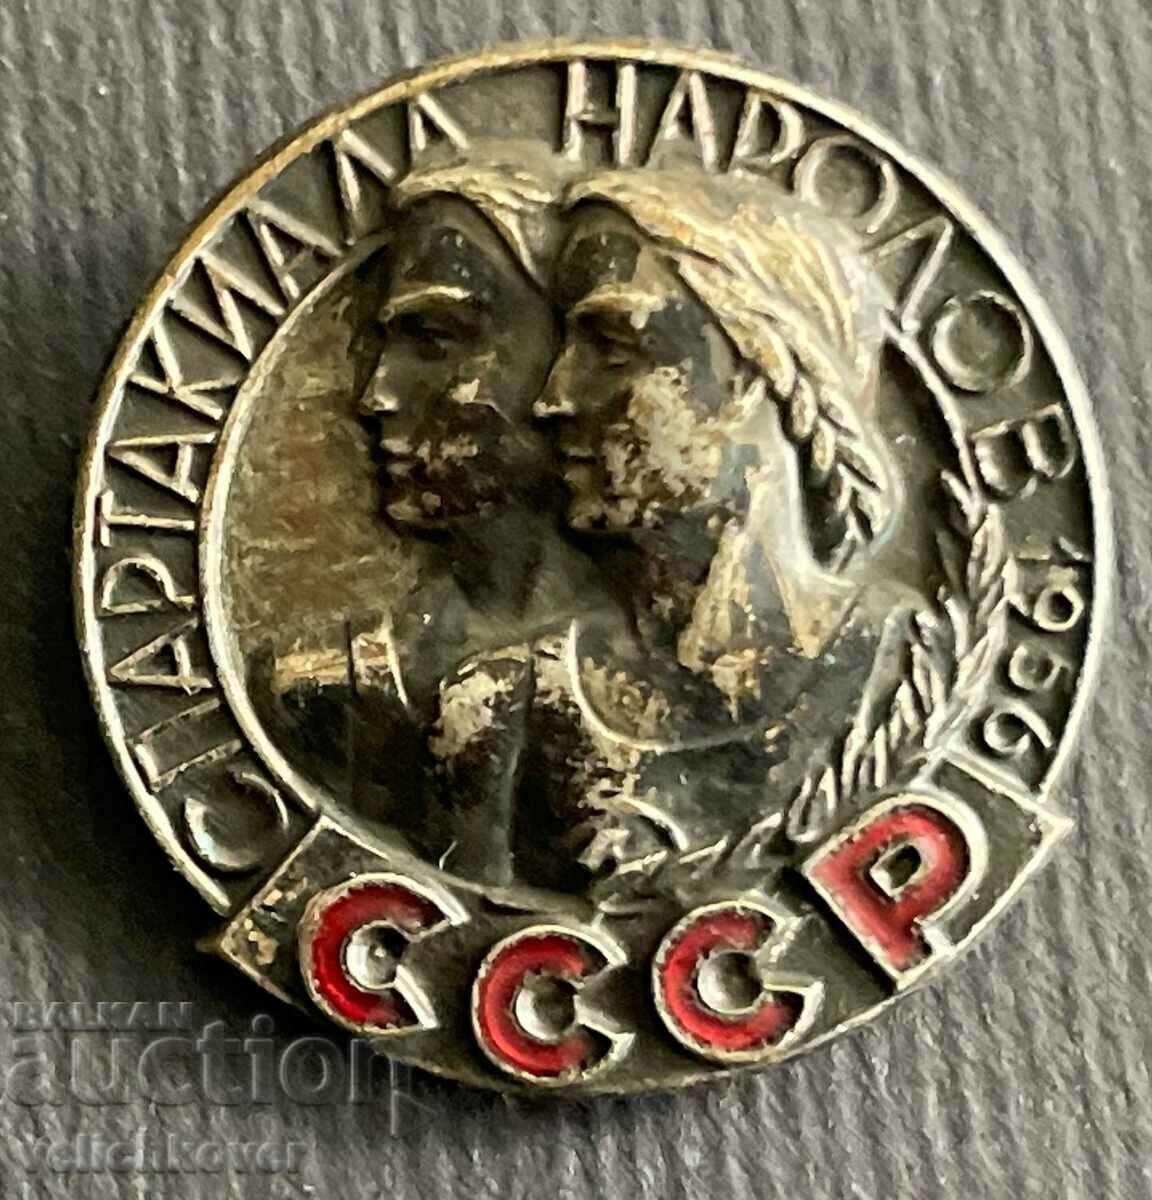 34753 СССР знак Спартакиада на народите на СССР 1956г Емайл